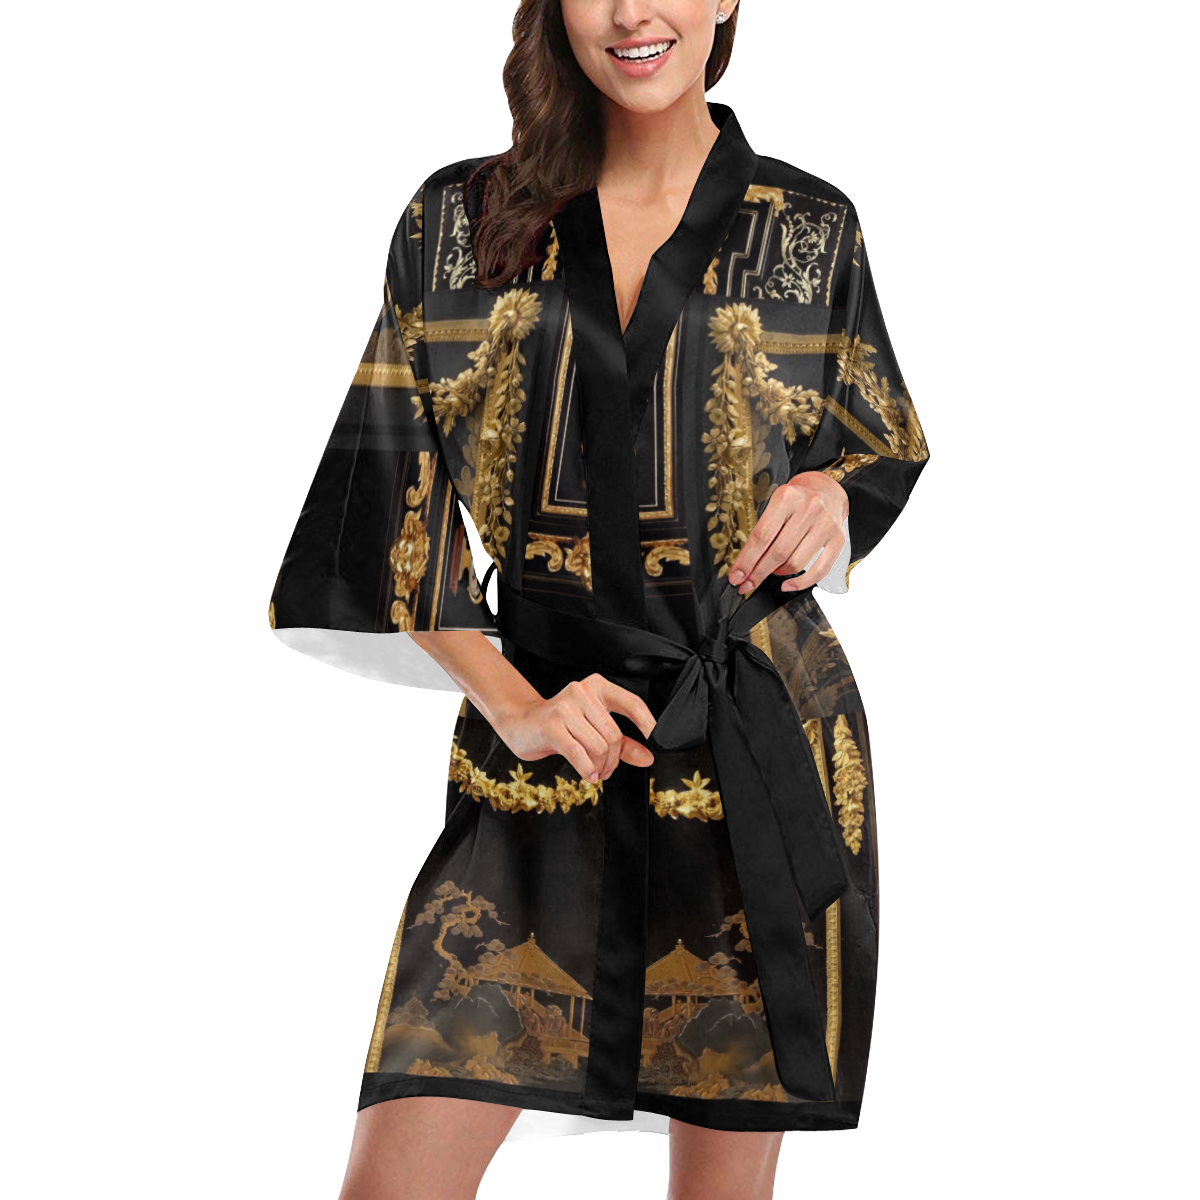 Robe | jasmine rose robe jcpenney womens robes ulta robe